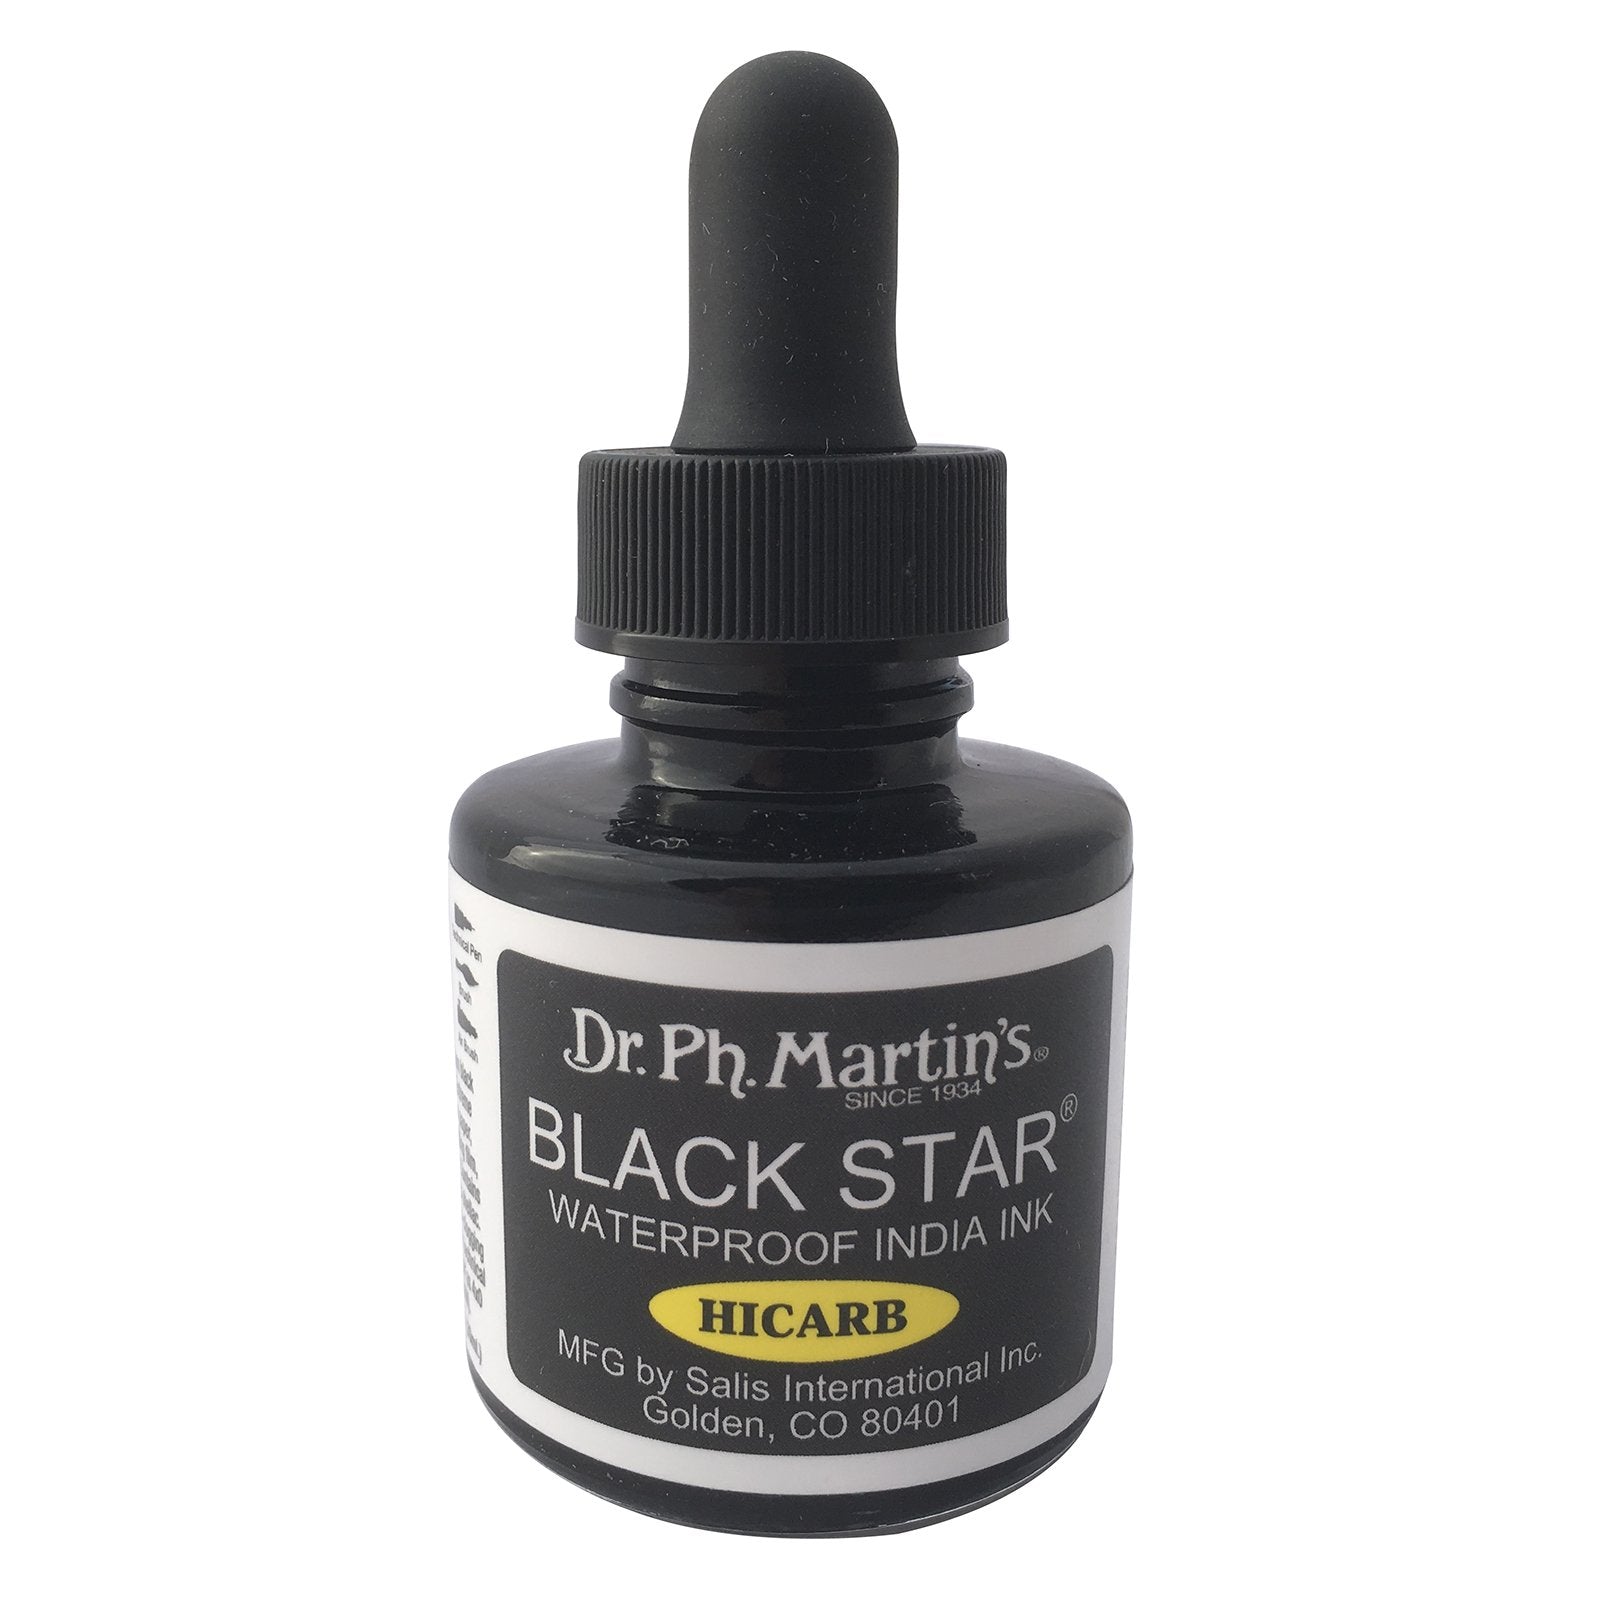 Dr. Ph. Martin's Black Star Hi Carb Waterproof India Ink